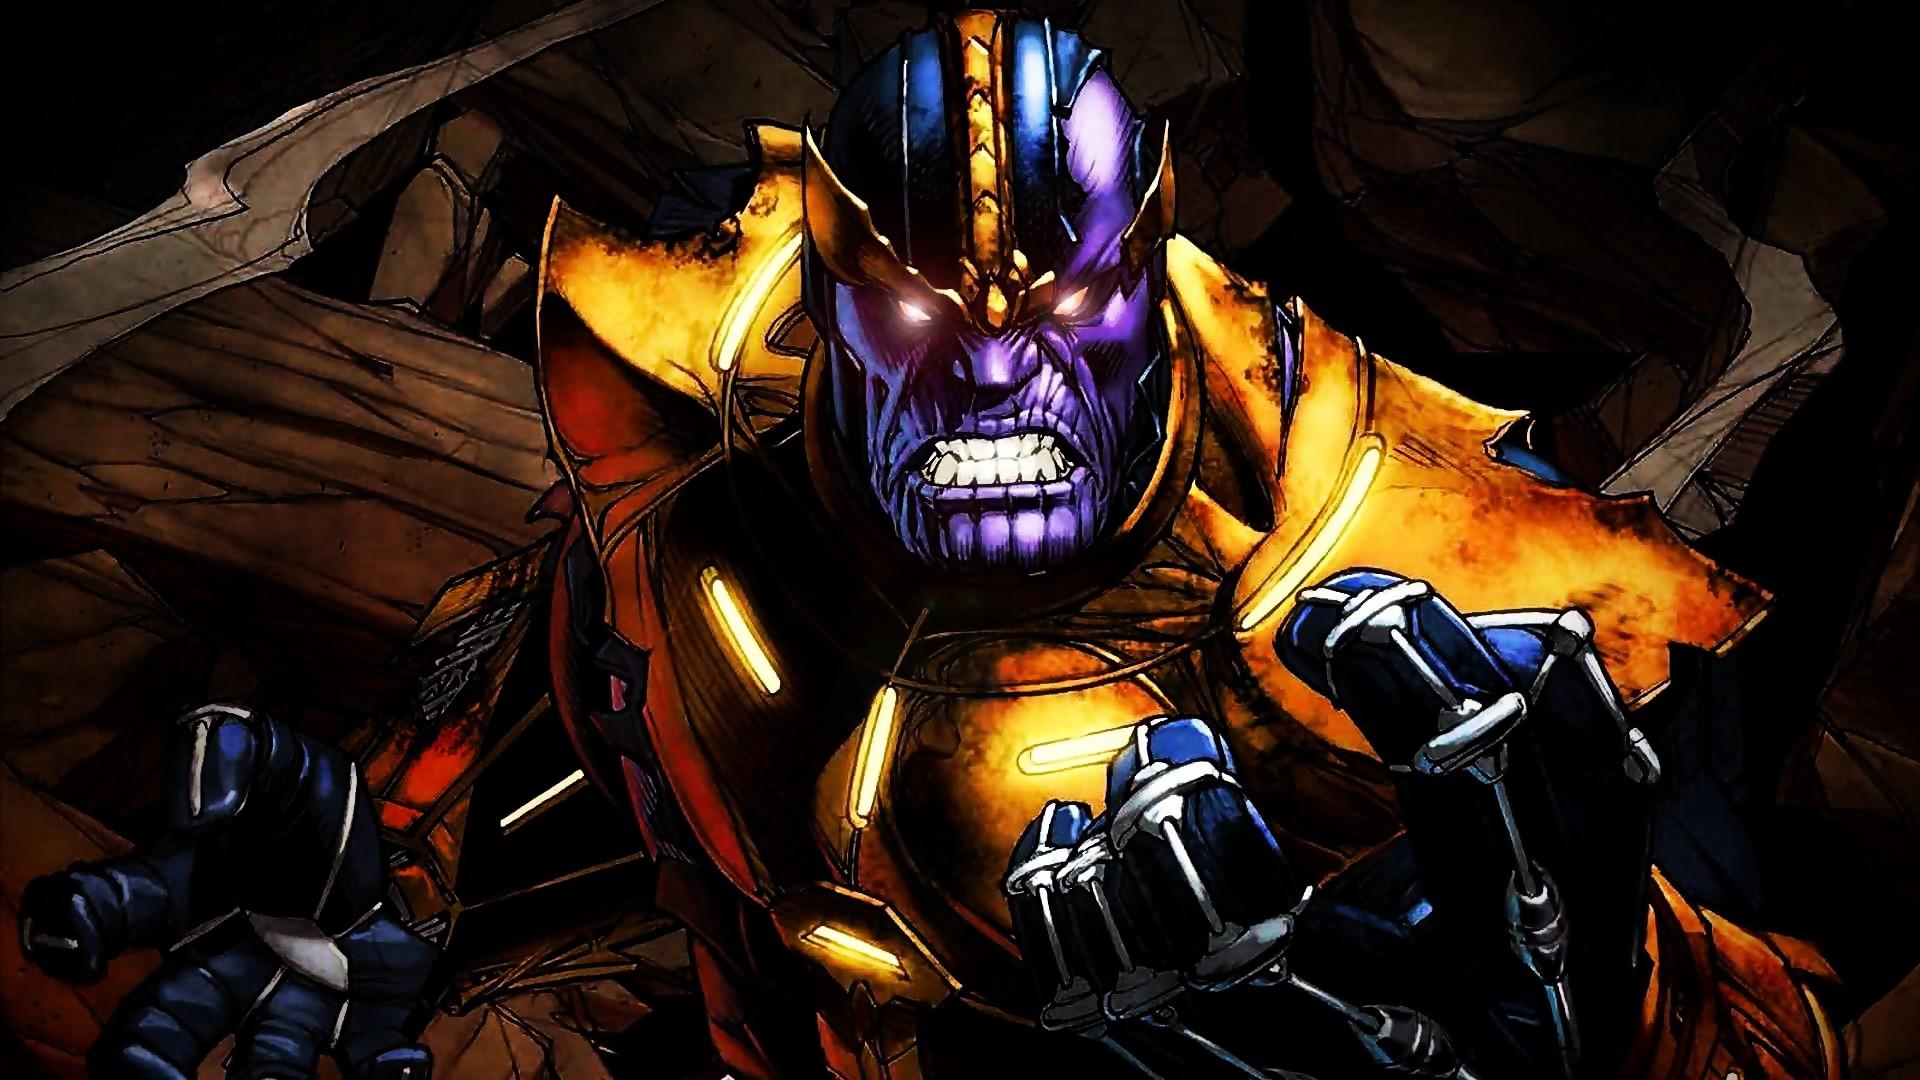 Thanos Wallpaper HD